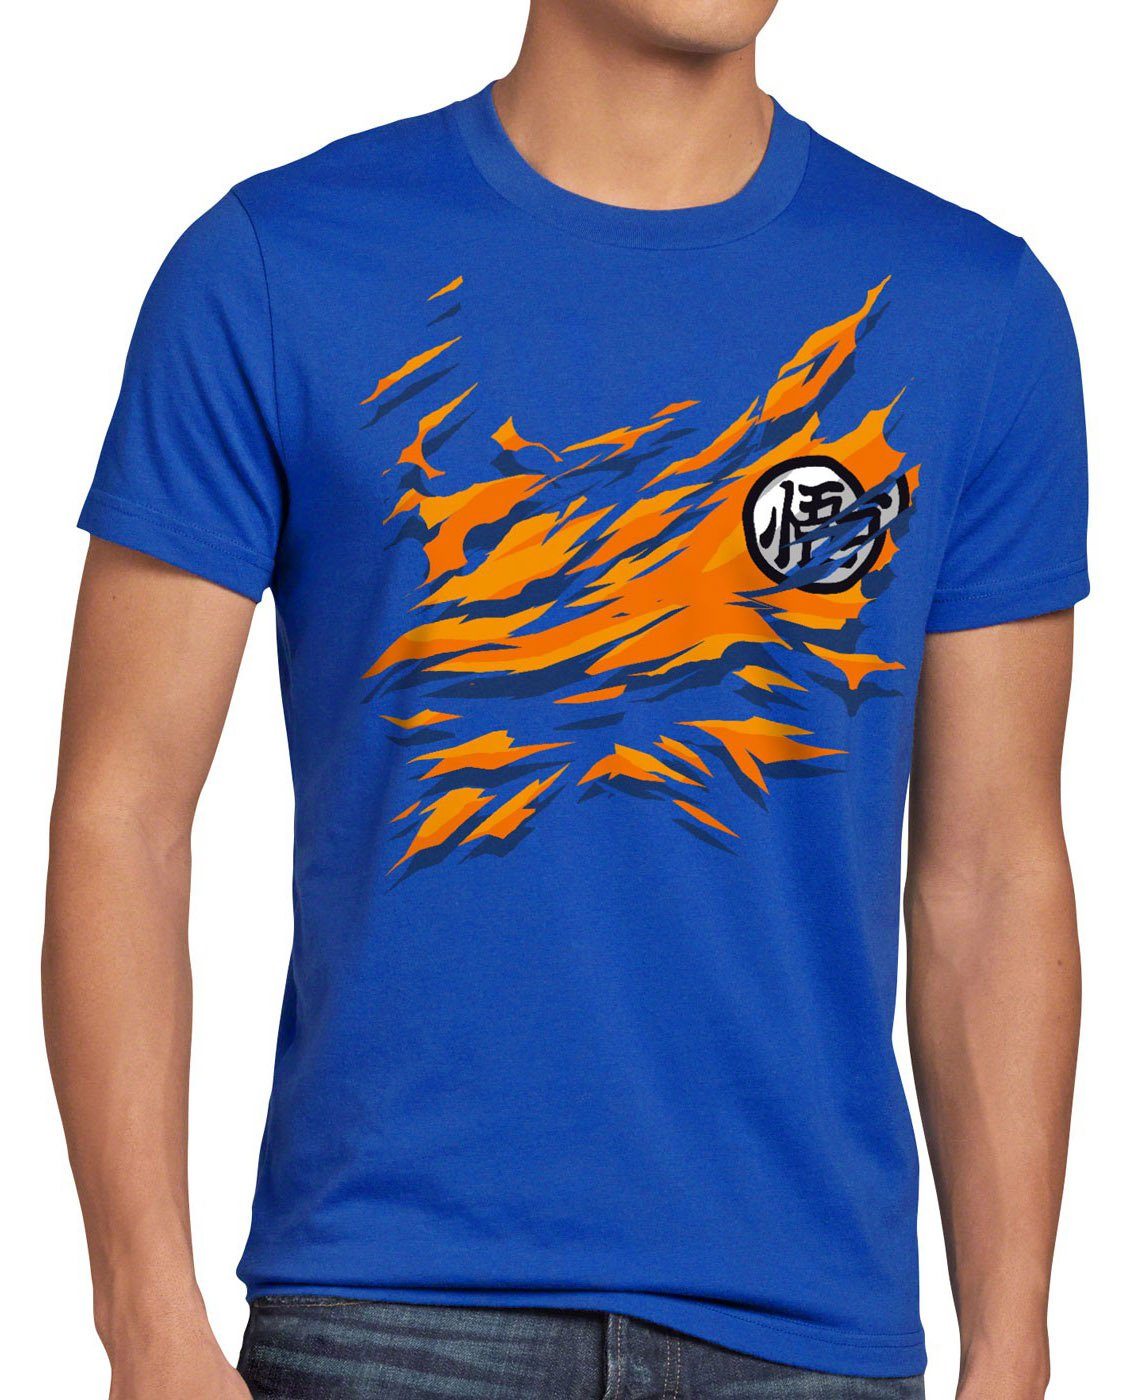 super Print-Shirt Herren saiyan dragon blau japan songoku Goku Brust T-Shirt vegeta style3 z super ball